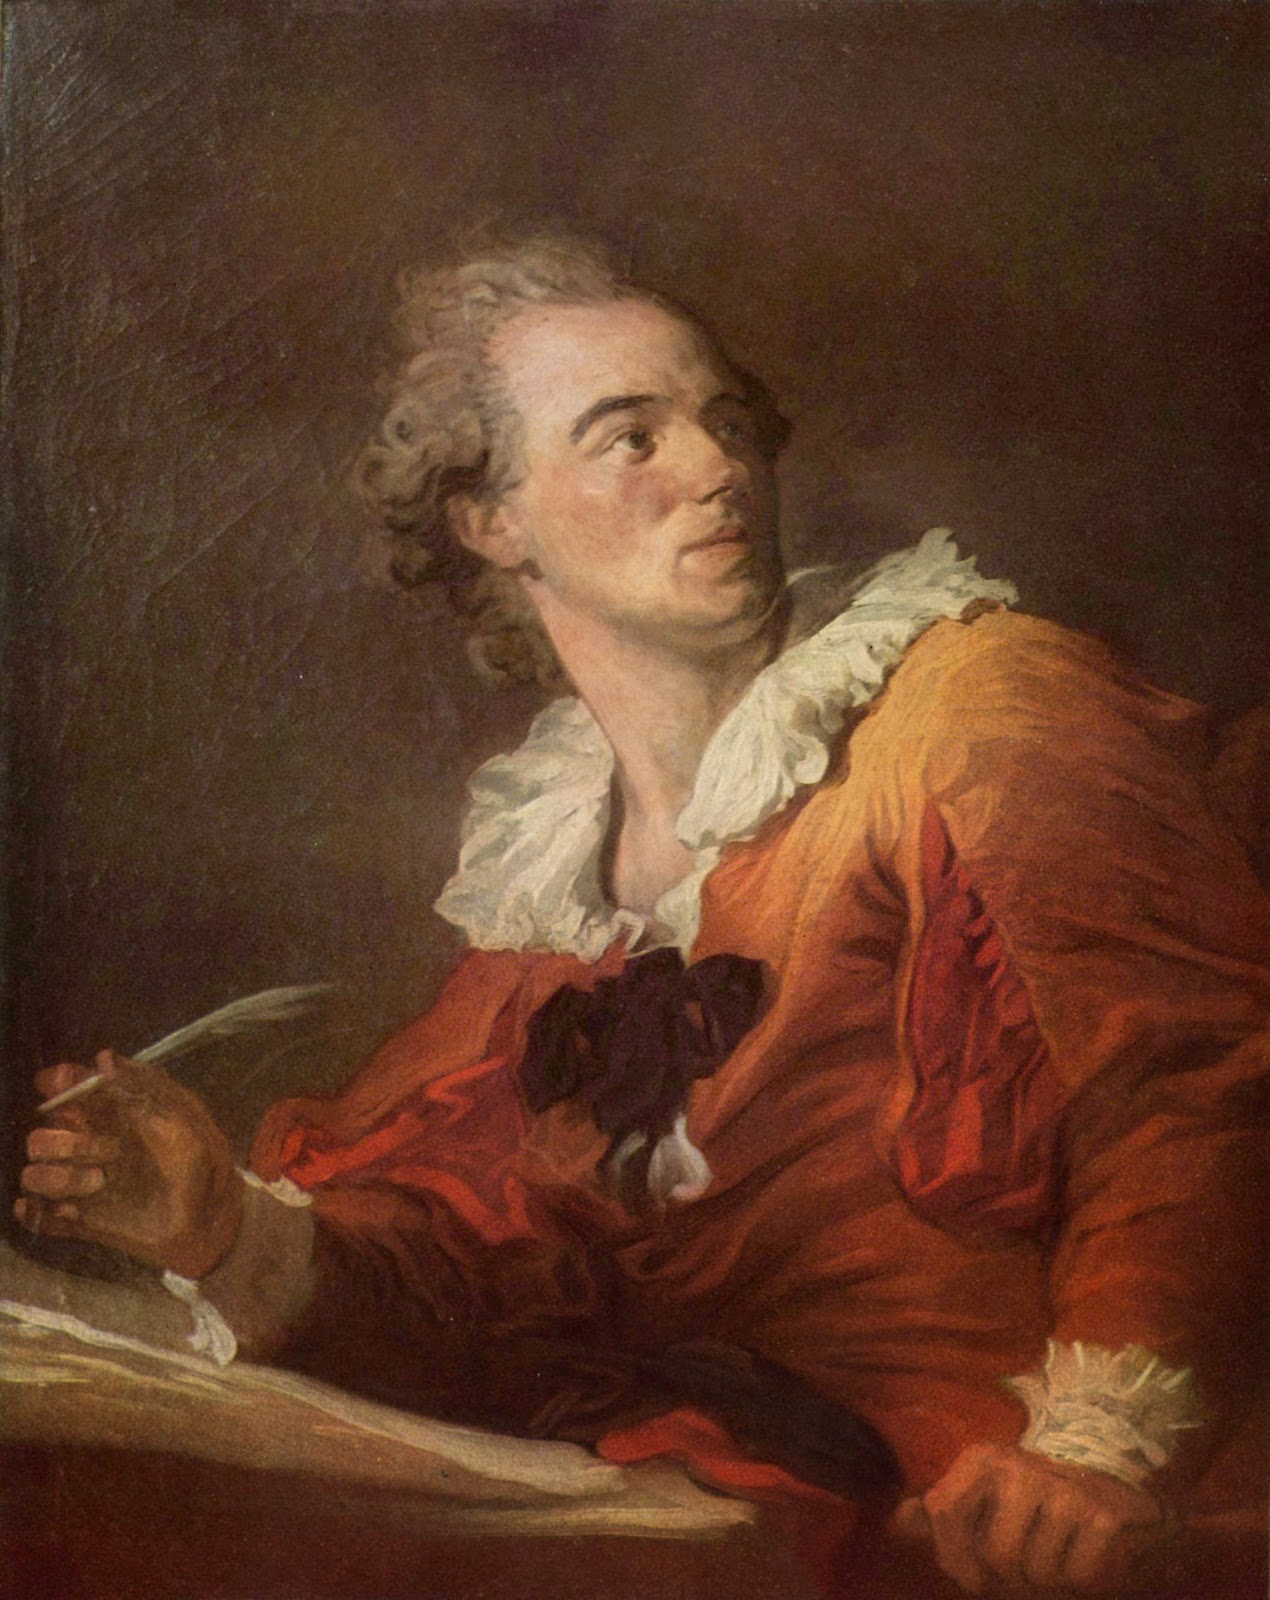 Jean+Honore+Fragonard-1732-1806 (120).jpg